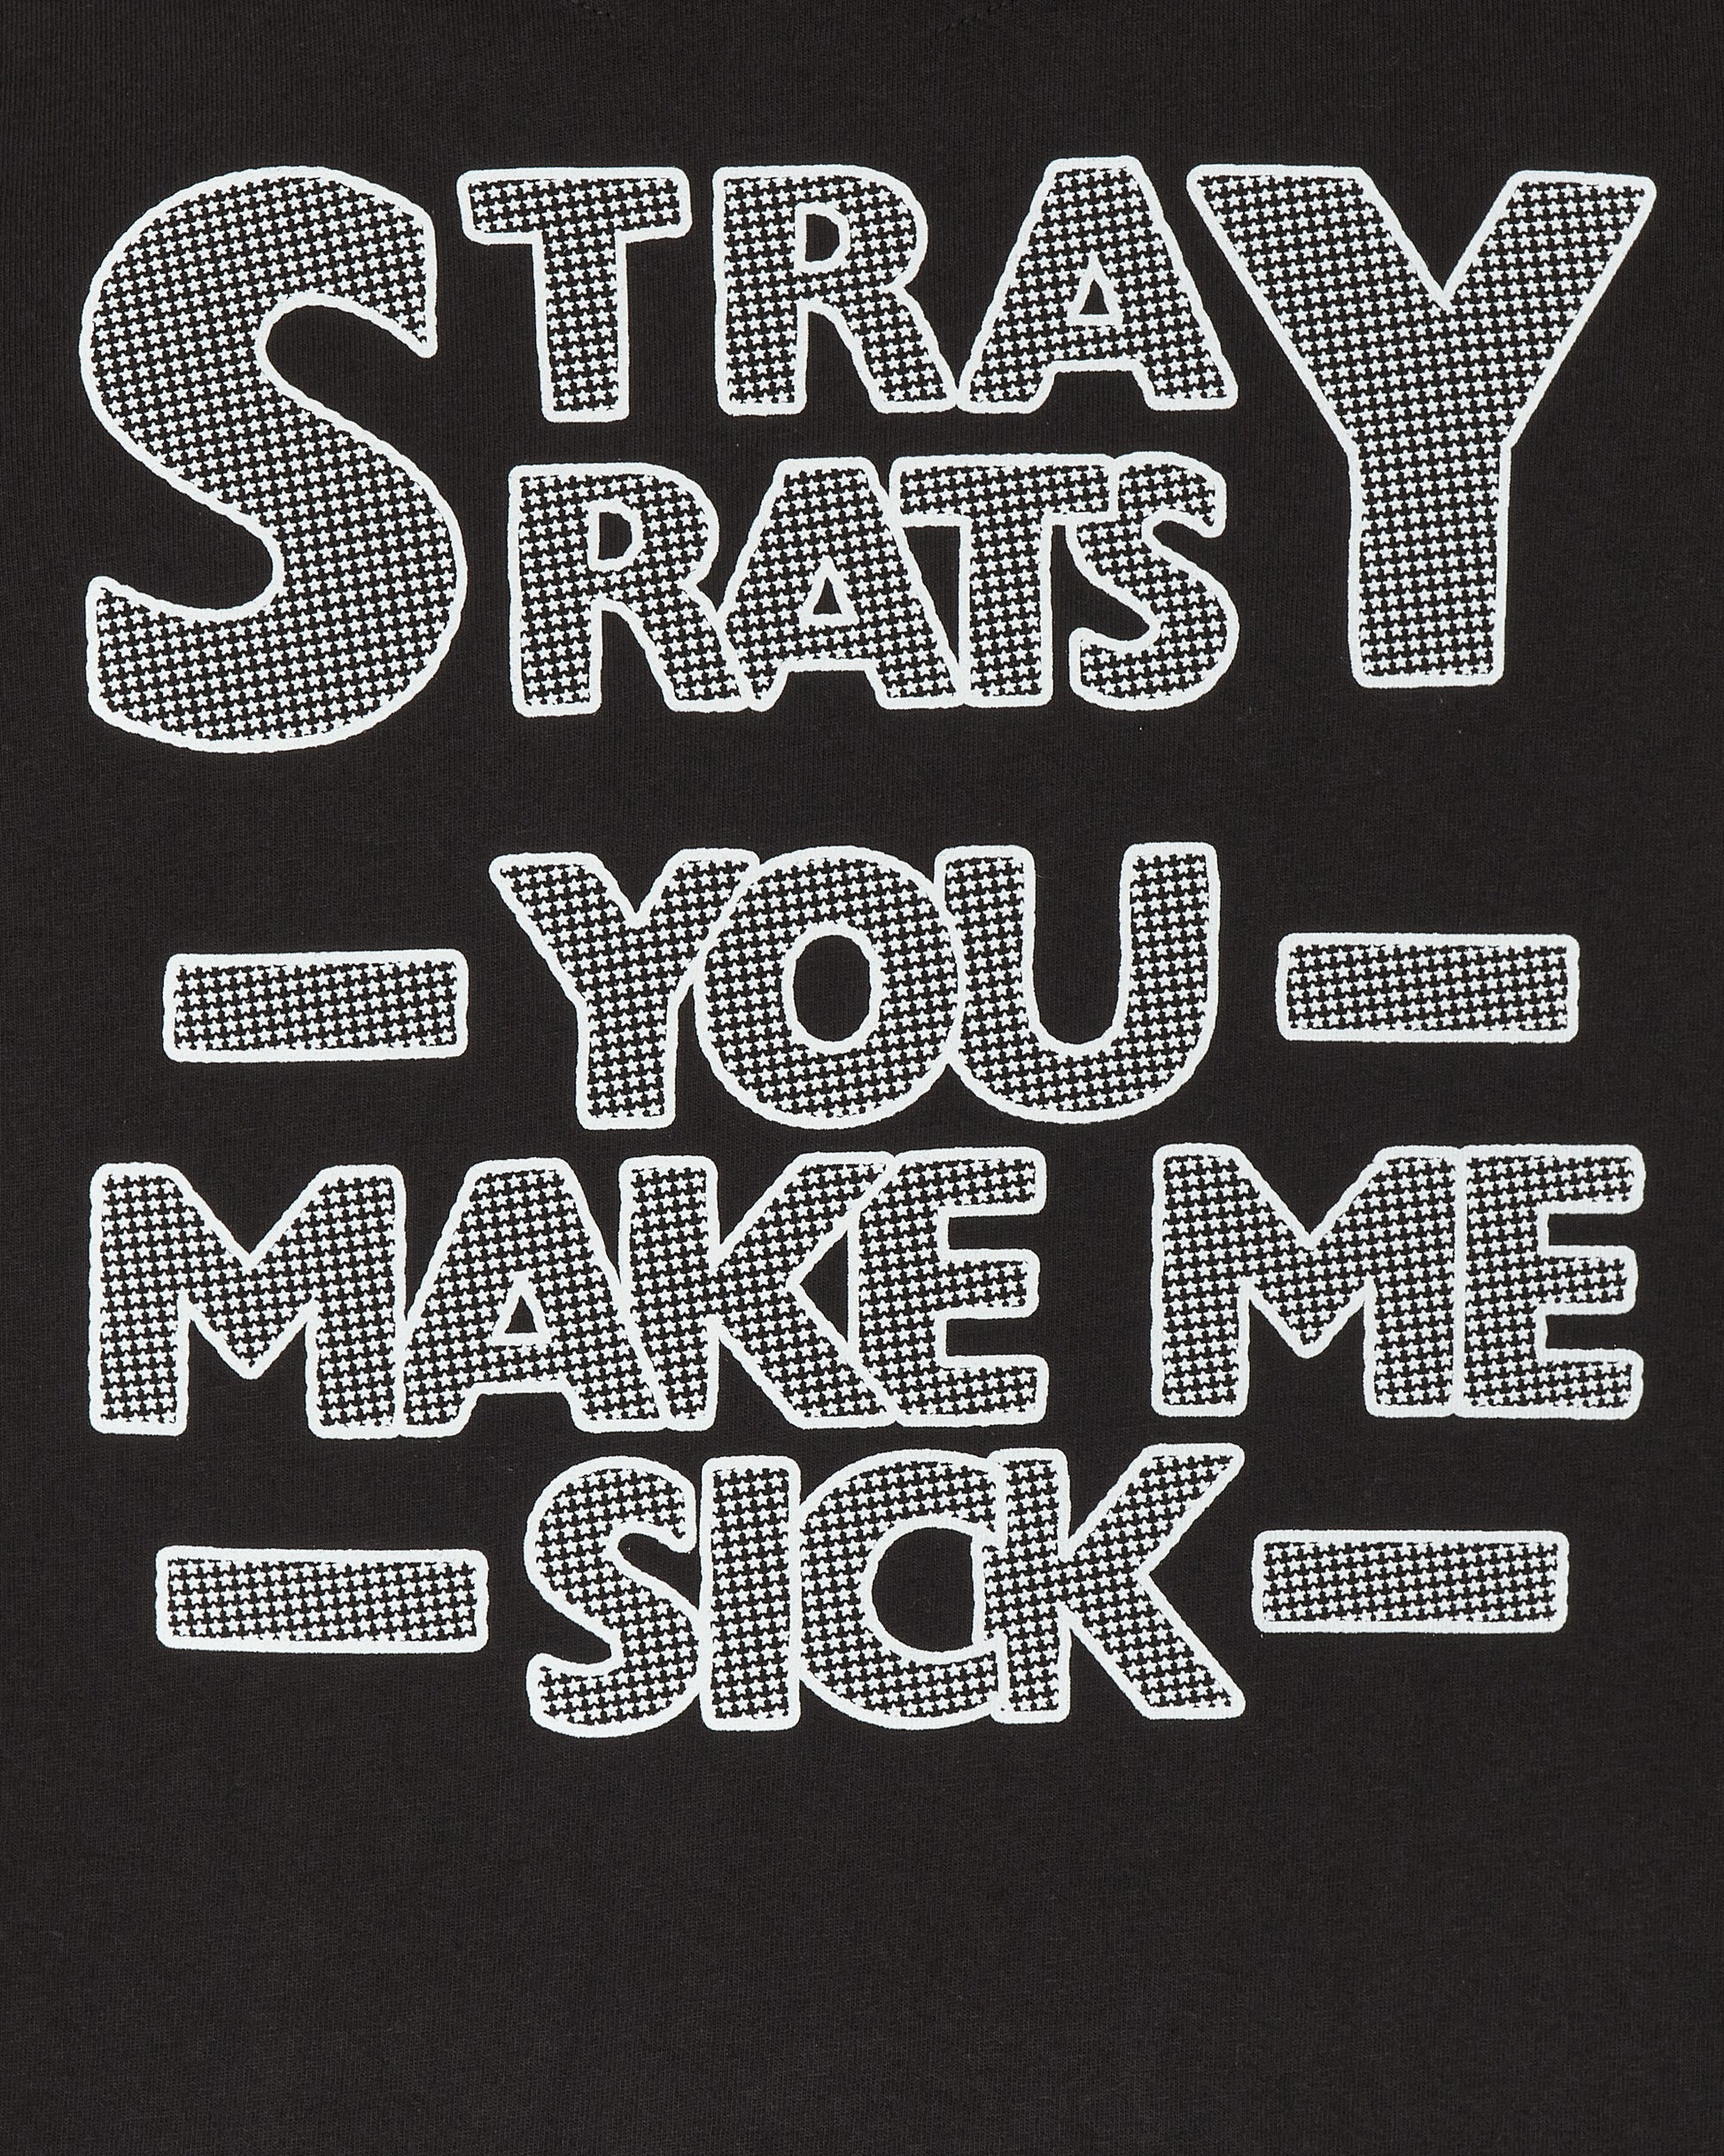 Stray Rats You Make Me Sick Tee Black T-Shirts Shortsleeve SRT1165 BLACK